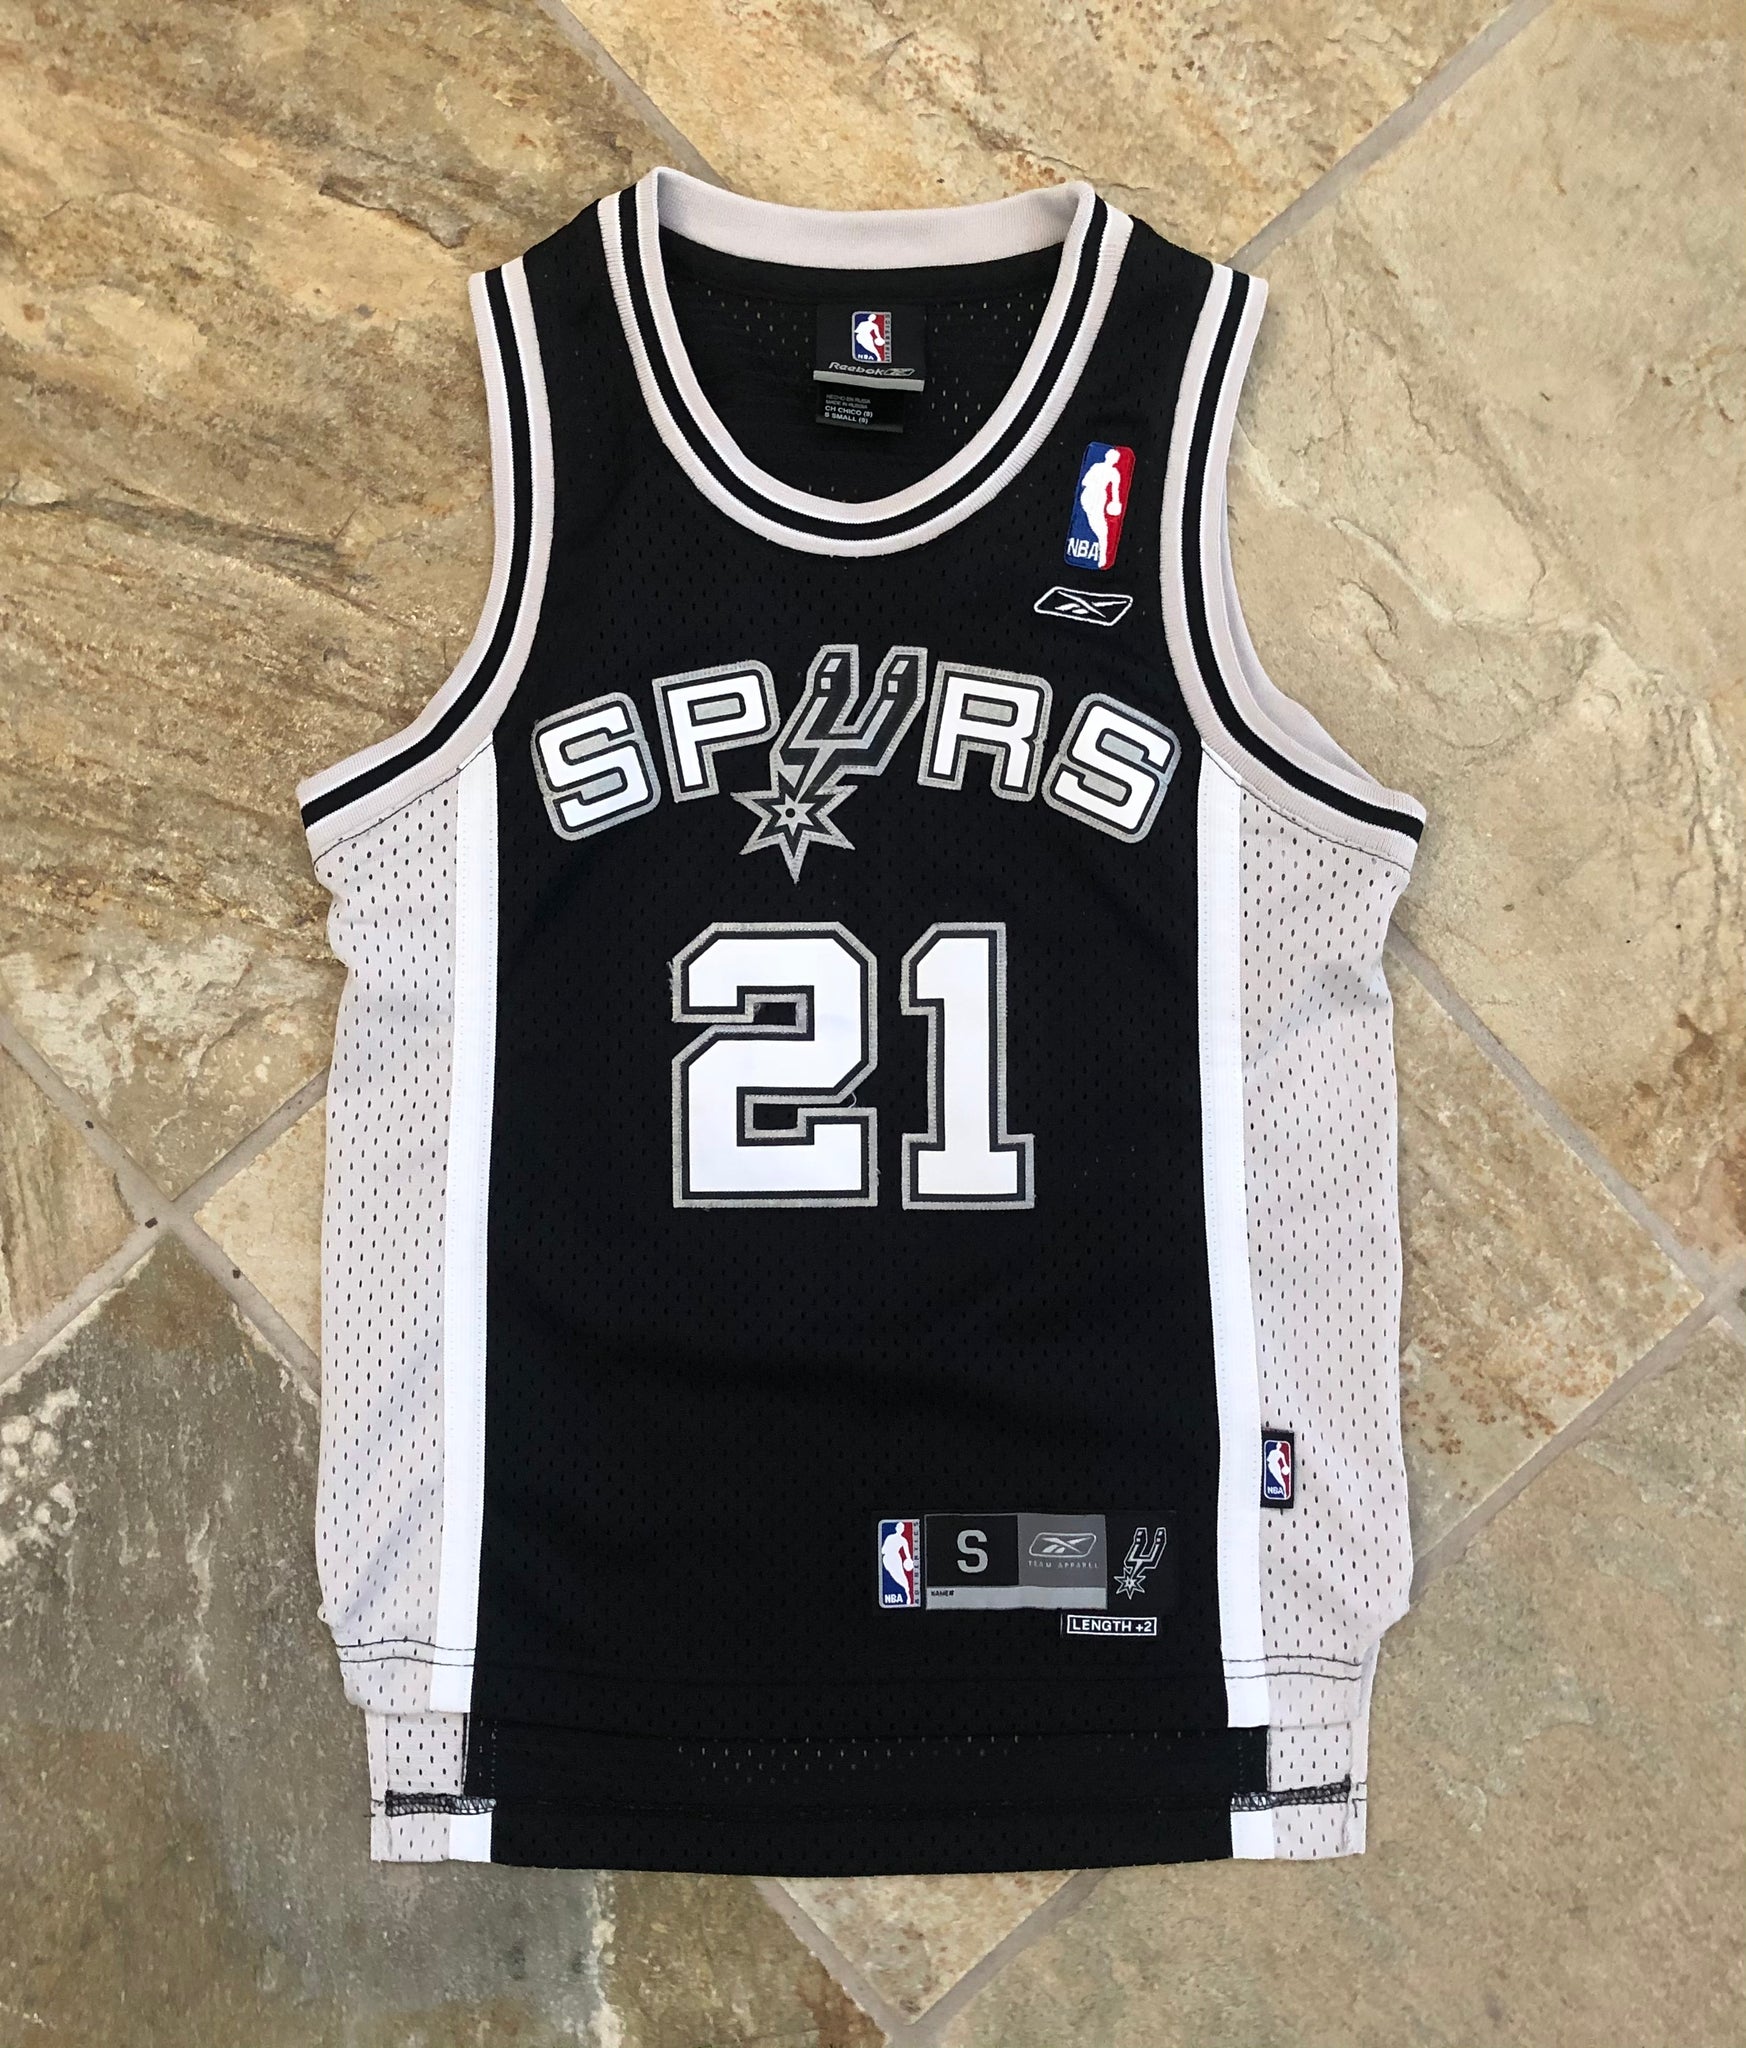 90s San Antonio Spurs Champion Basketball Shorts Size Small 